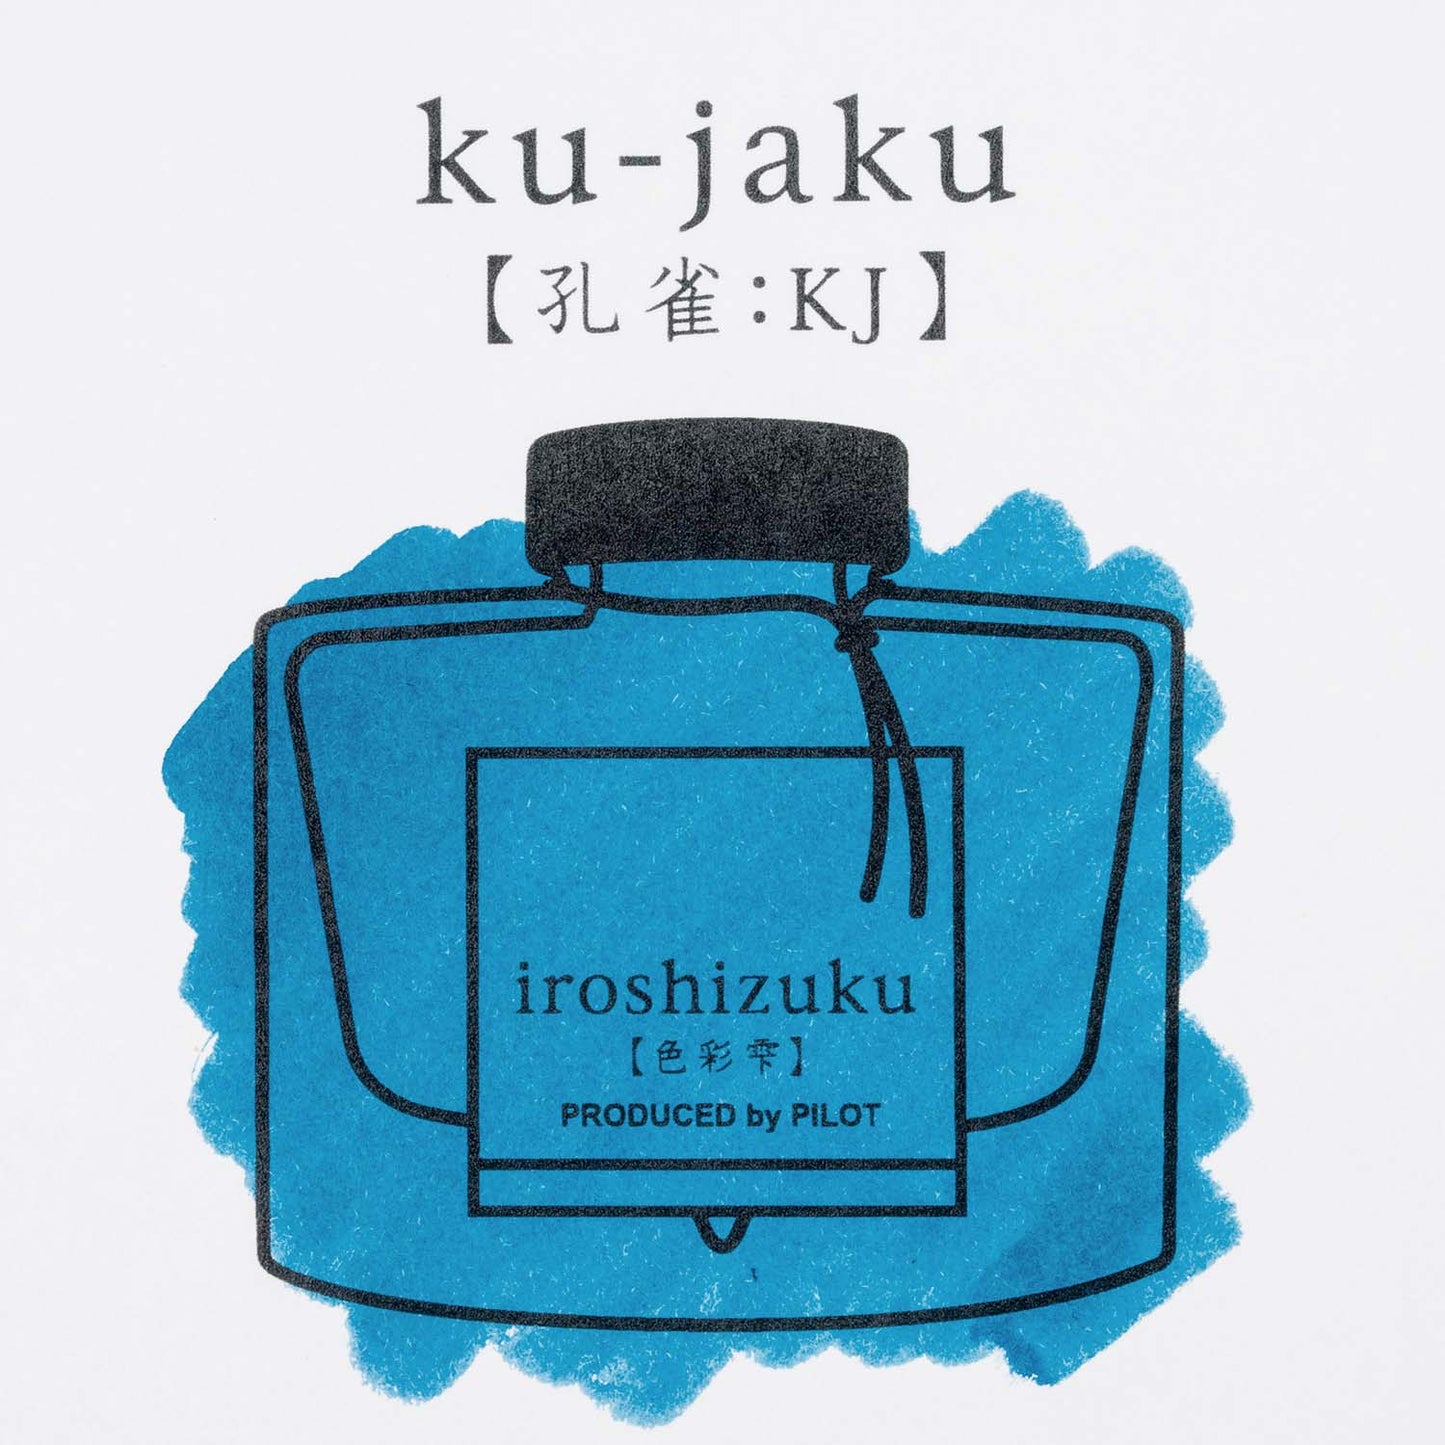 Pilot Iroshizuku Fountain Pen Ink - Ku-jaku (Peacock) - 50 ml Bottle teal sample